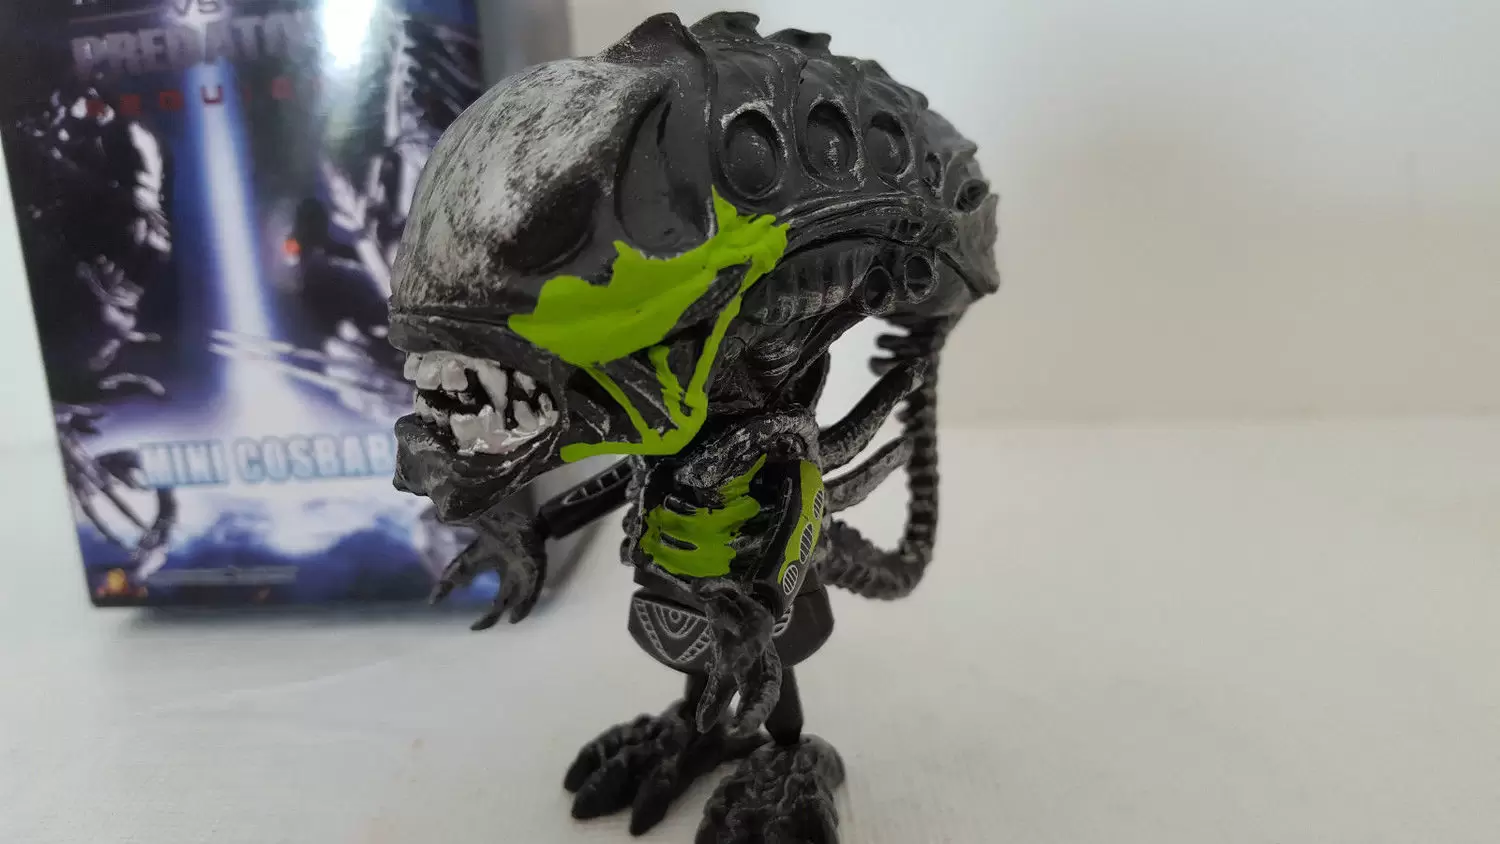 Cosbaby Figures - Battle Damaged Alien